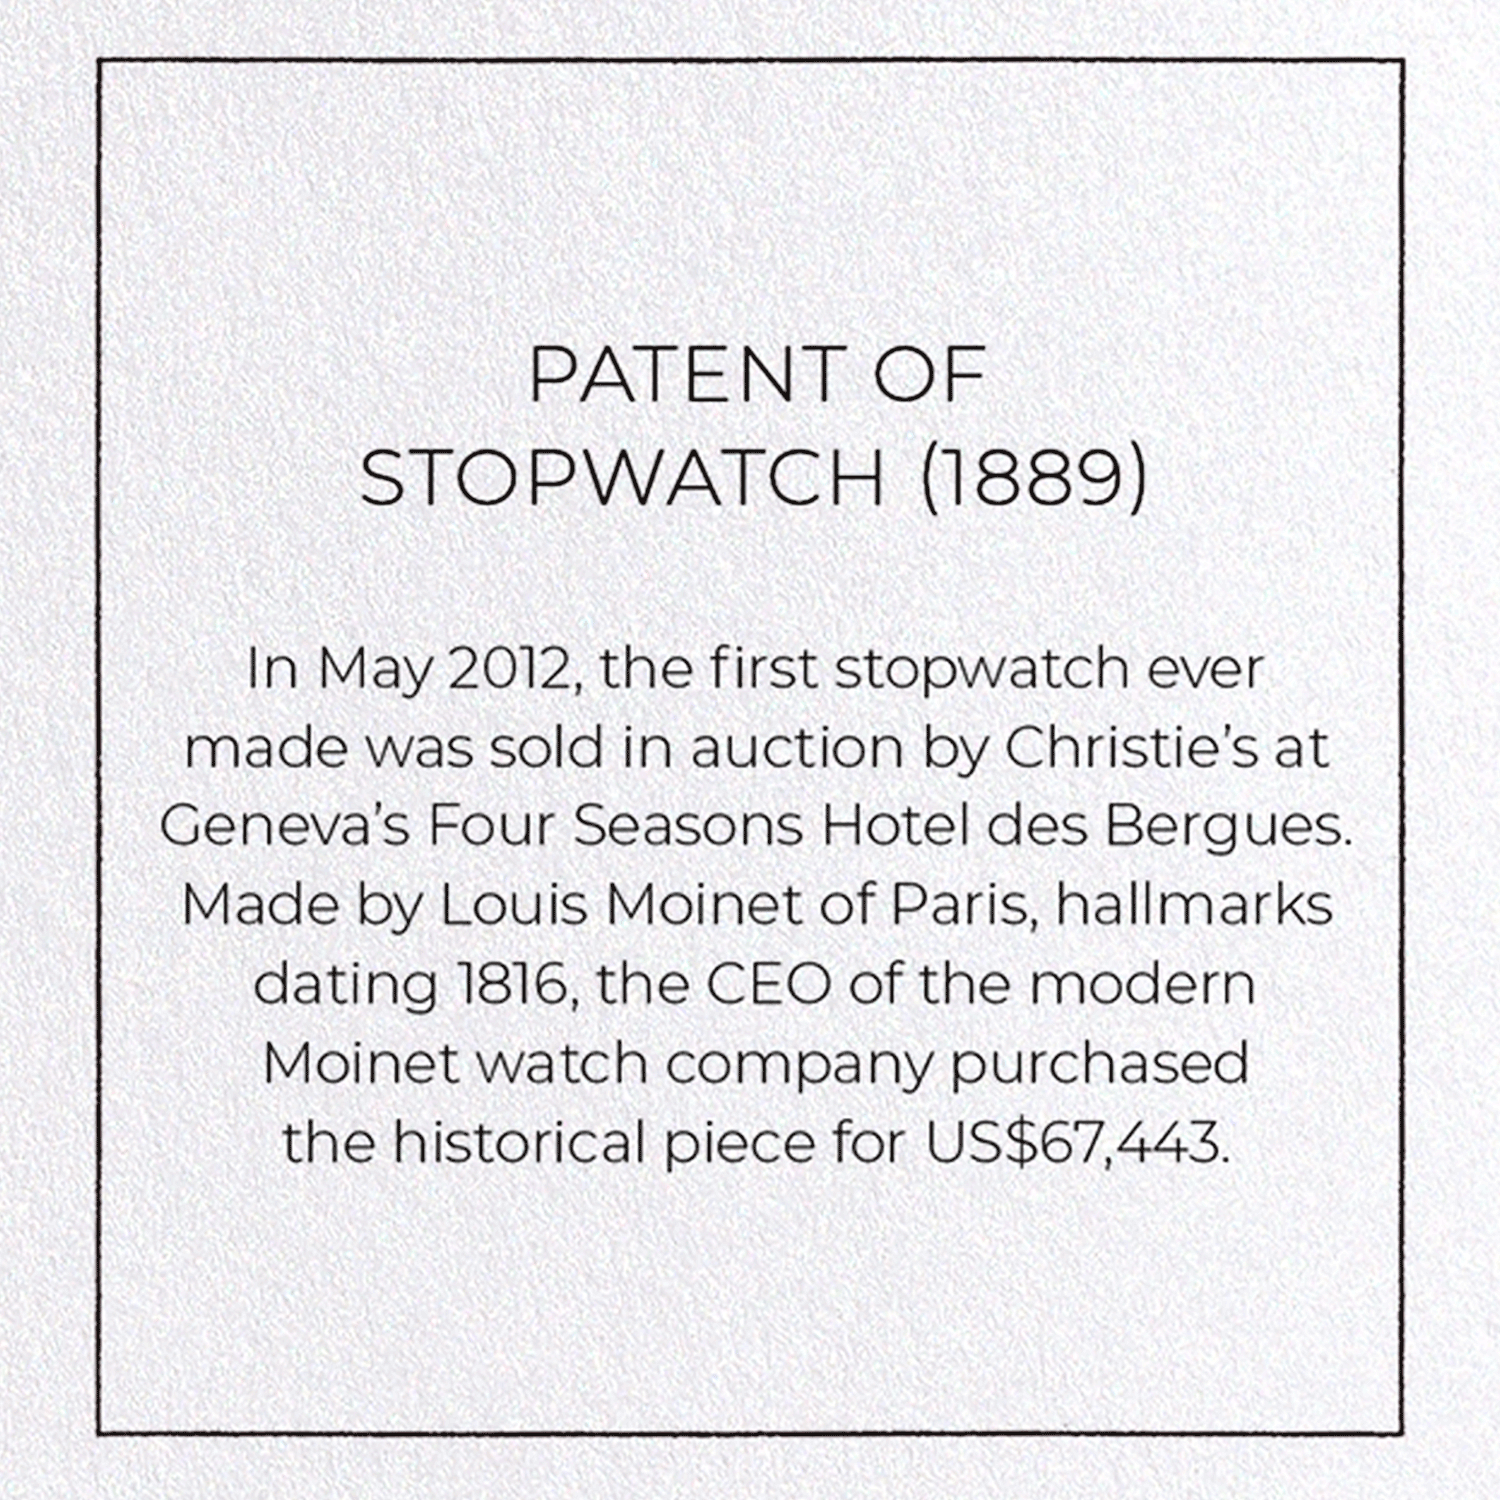 PATENT OF STOPWATCH (1889)